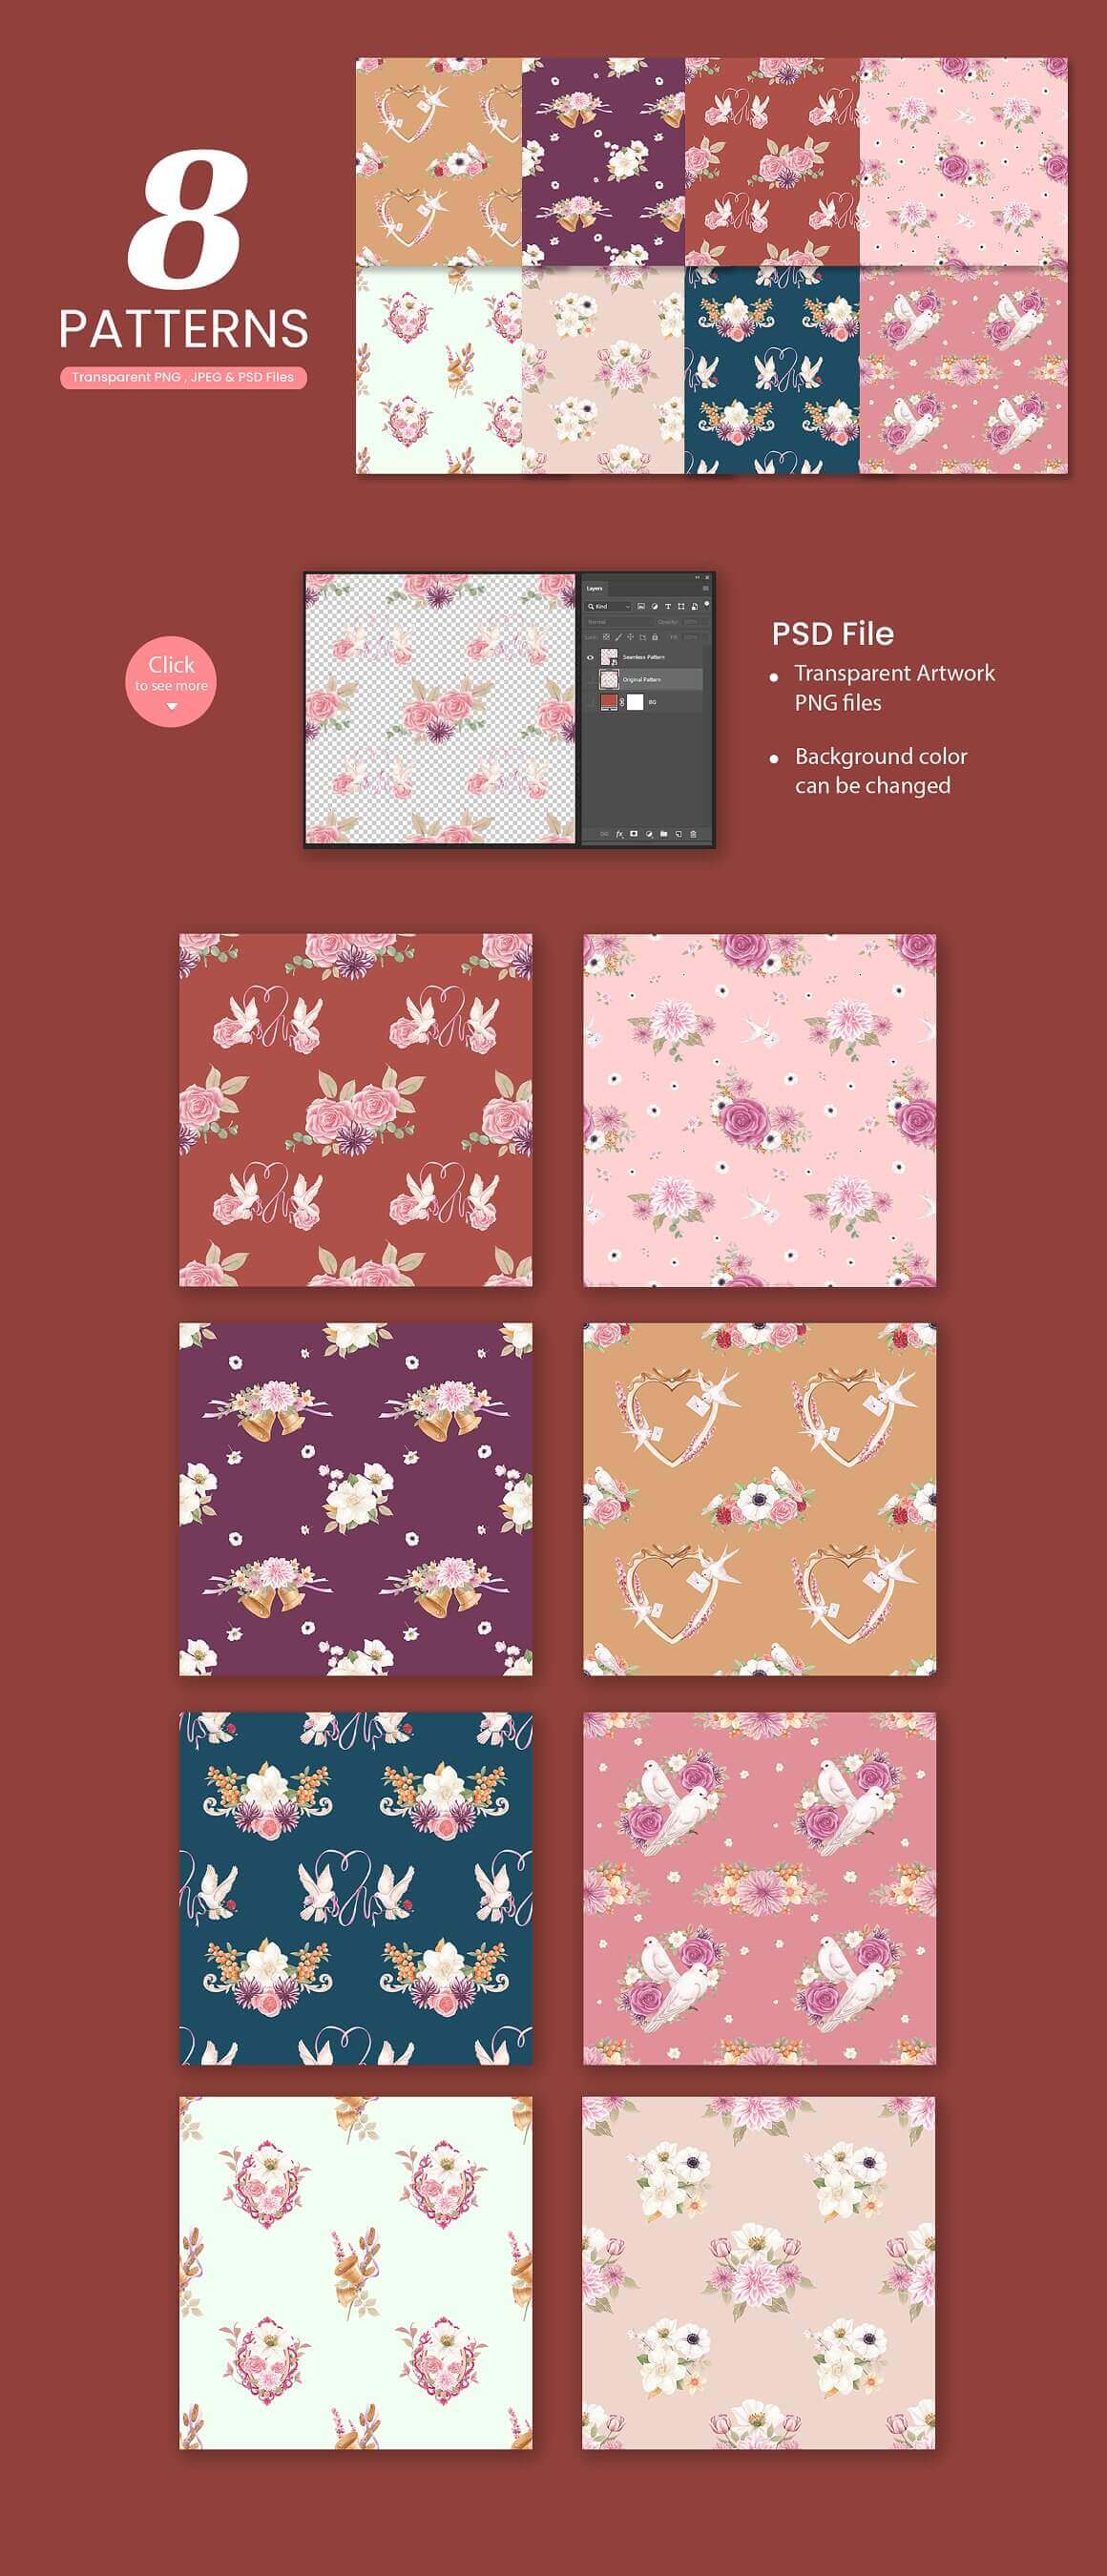 8 Patterns with Flower Design.